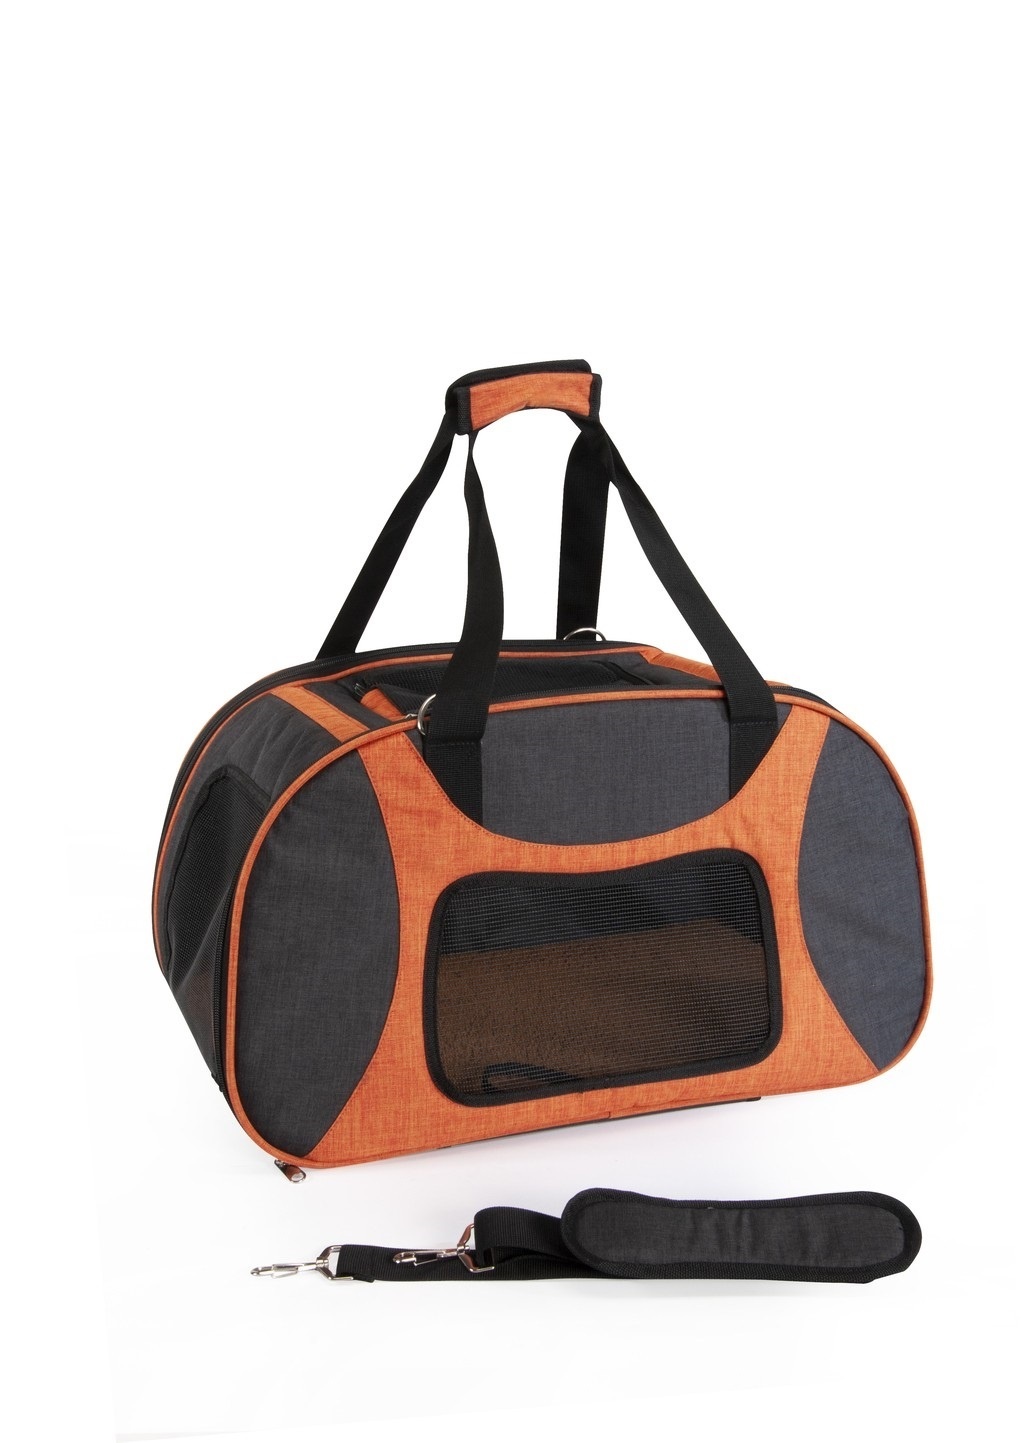 Camon Camon сумка-переноска со съёмной тележкой, 53x31x31 см (3,32 кг) camon camon сумка переноска со съёмной тележкой 53x31x31 см 3 32 кг